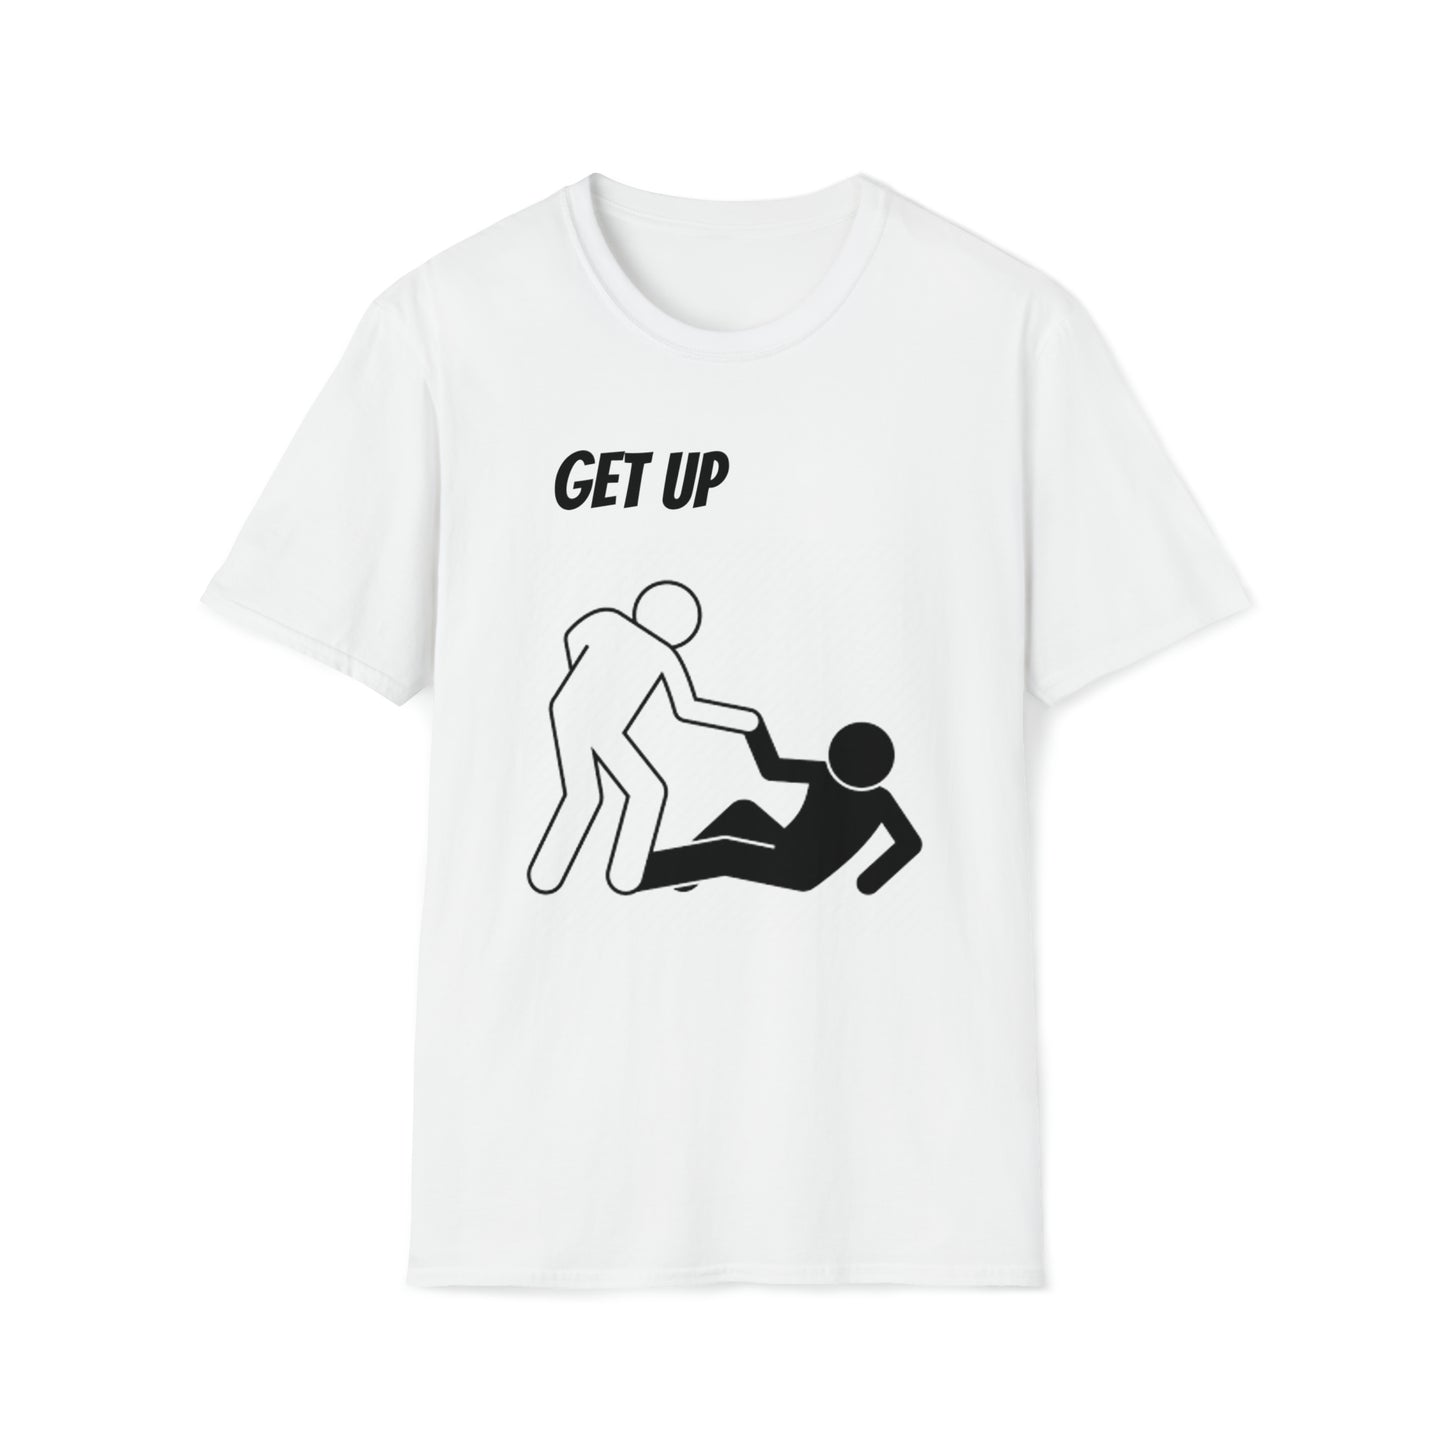 Get Up inspirational T-Shirt